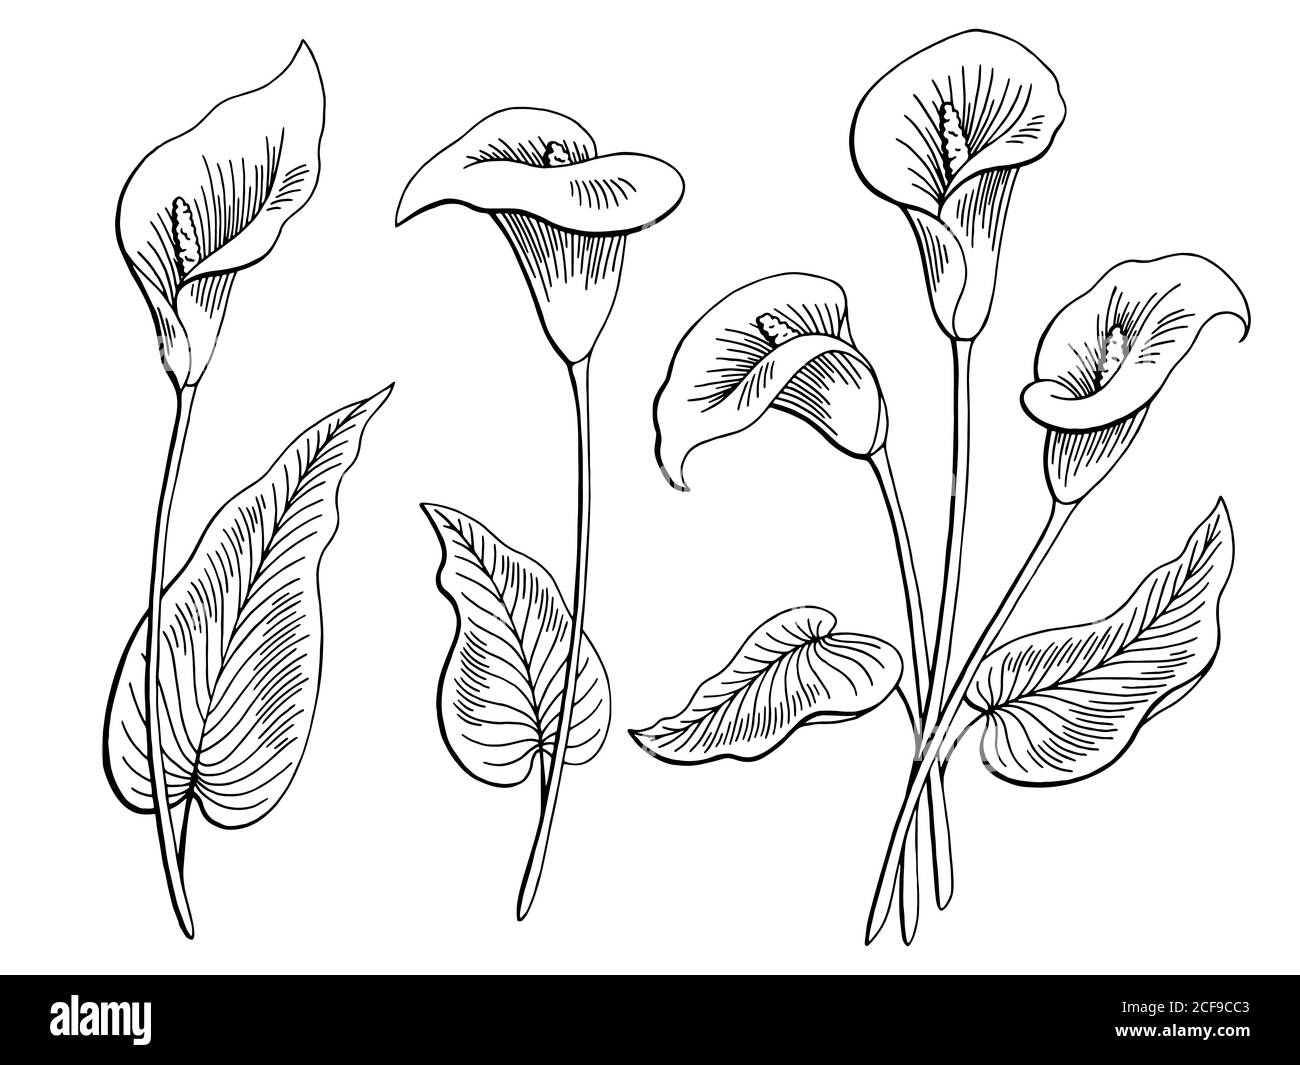 Callas Blume Grafik schwarz weiß isoliert Skizze Illustration Vektor  Stock-Vektorgrafik - Alamy